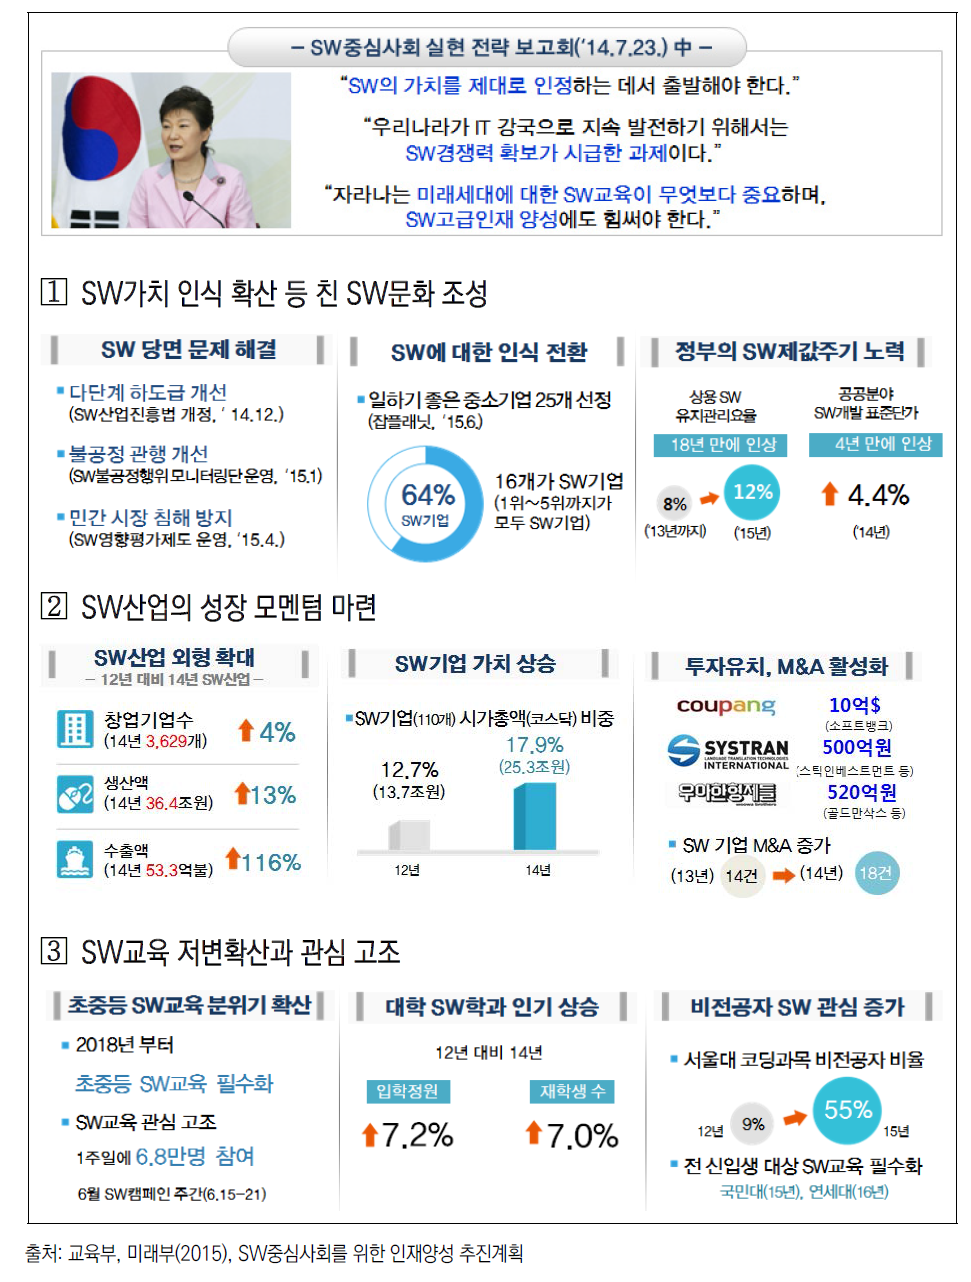 SW 중심사회 정책의 주요 성과